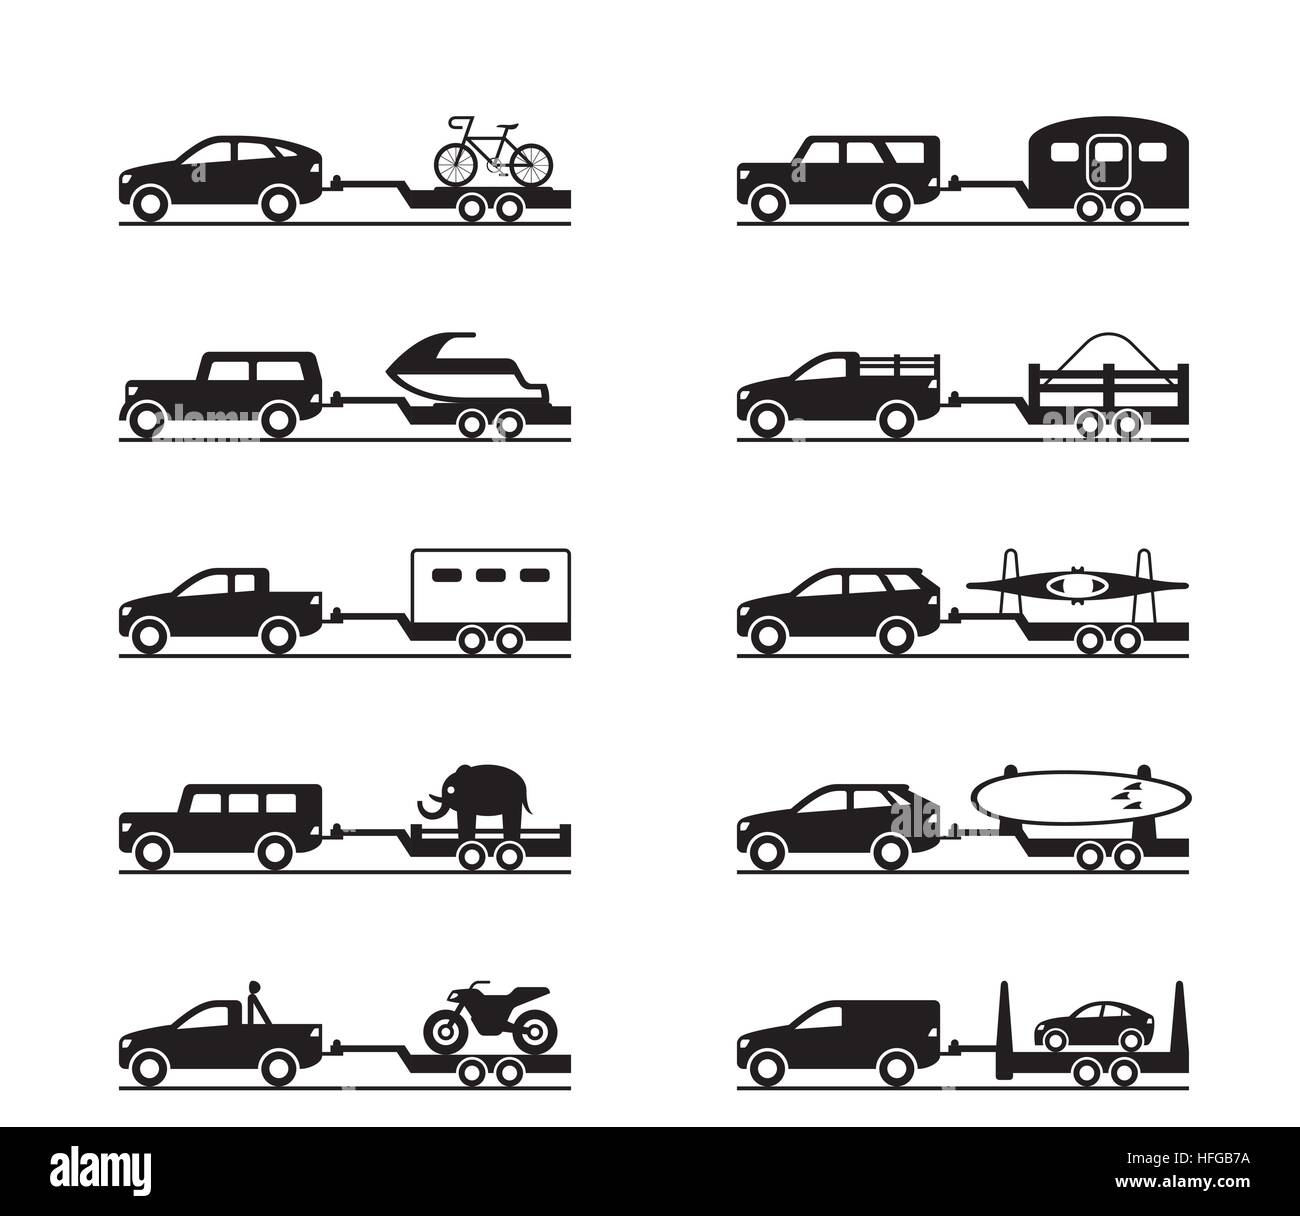 Vans und Pickups mit Anhänger - Vektor-illustration Stock-Vektorgrafik -  Alamy